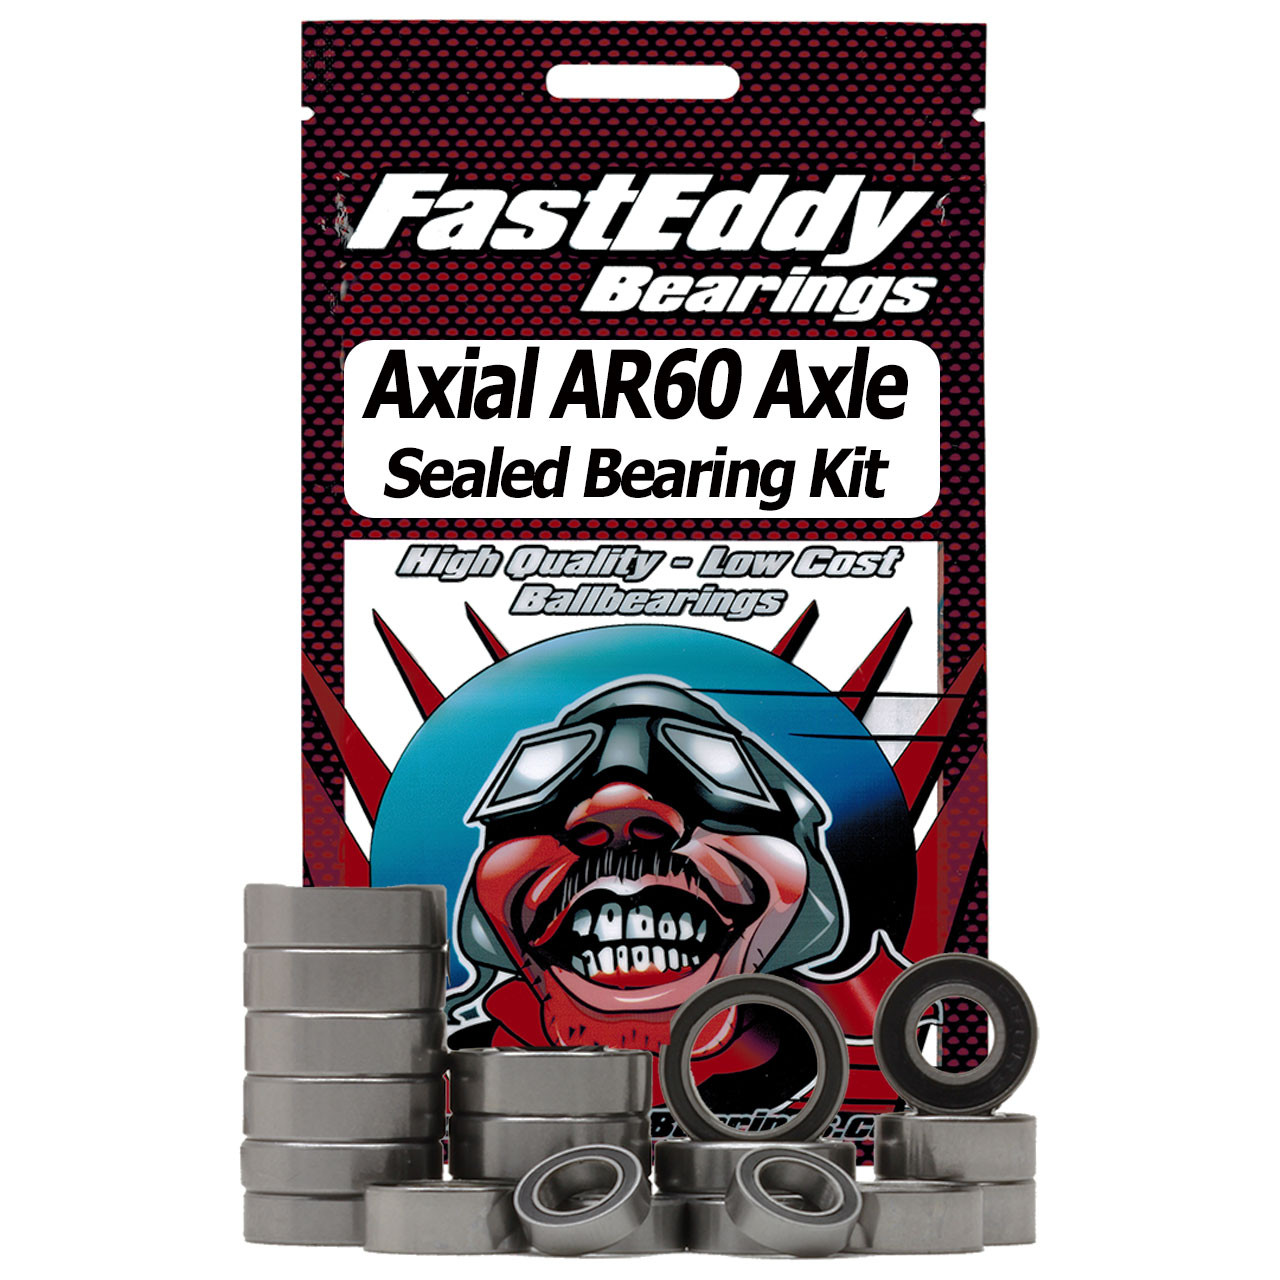 Axial AR60 Axle Sealed Bearing Kit (Single Axle Set-Fast Eddy Bearings)